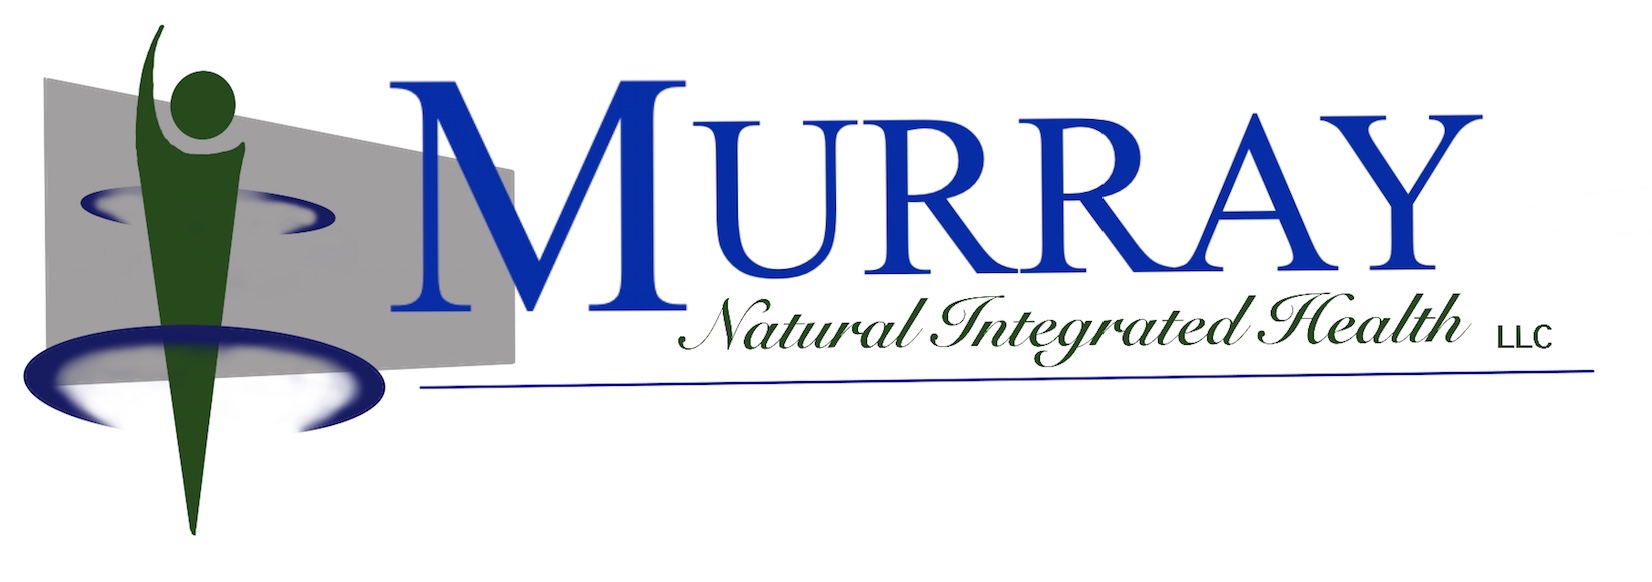 Murray Natural Integrated Health